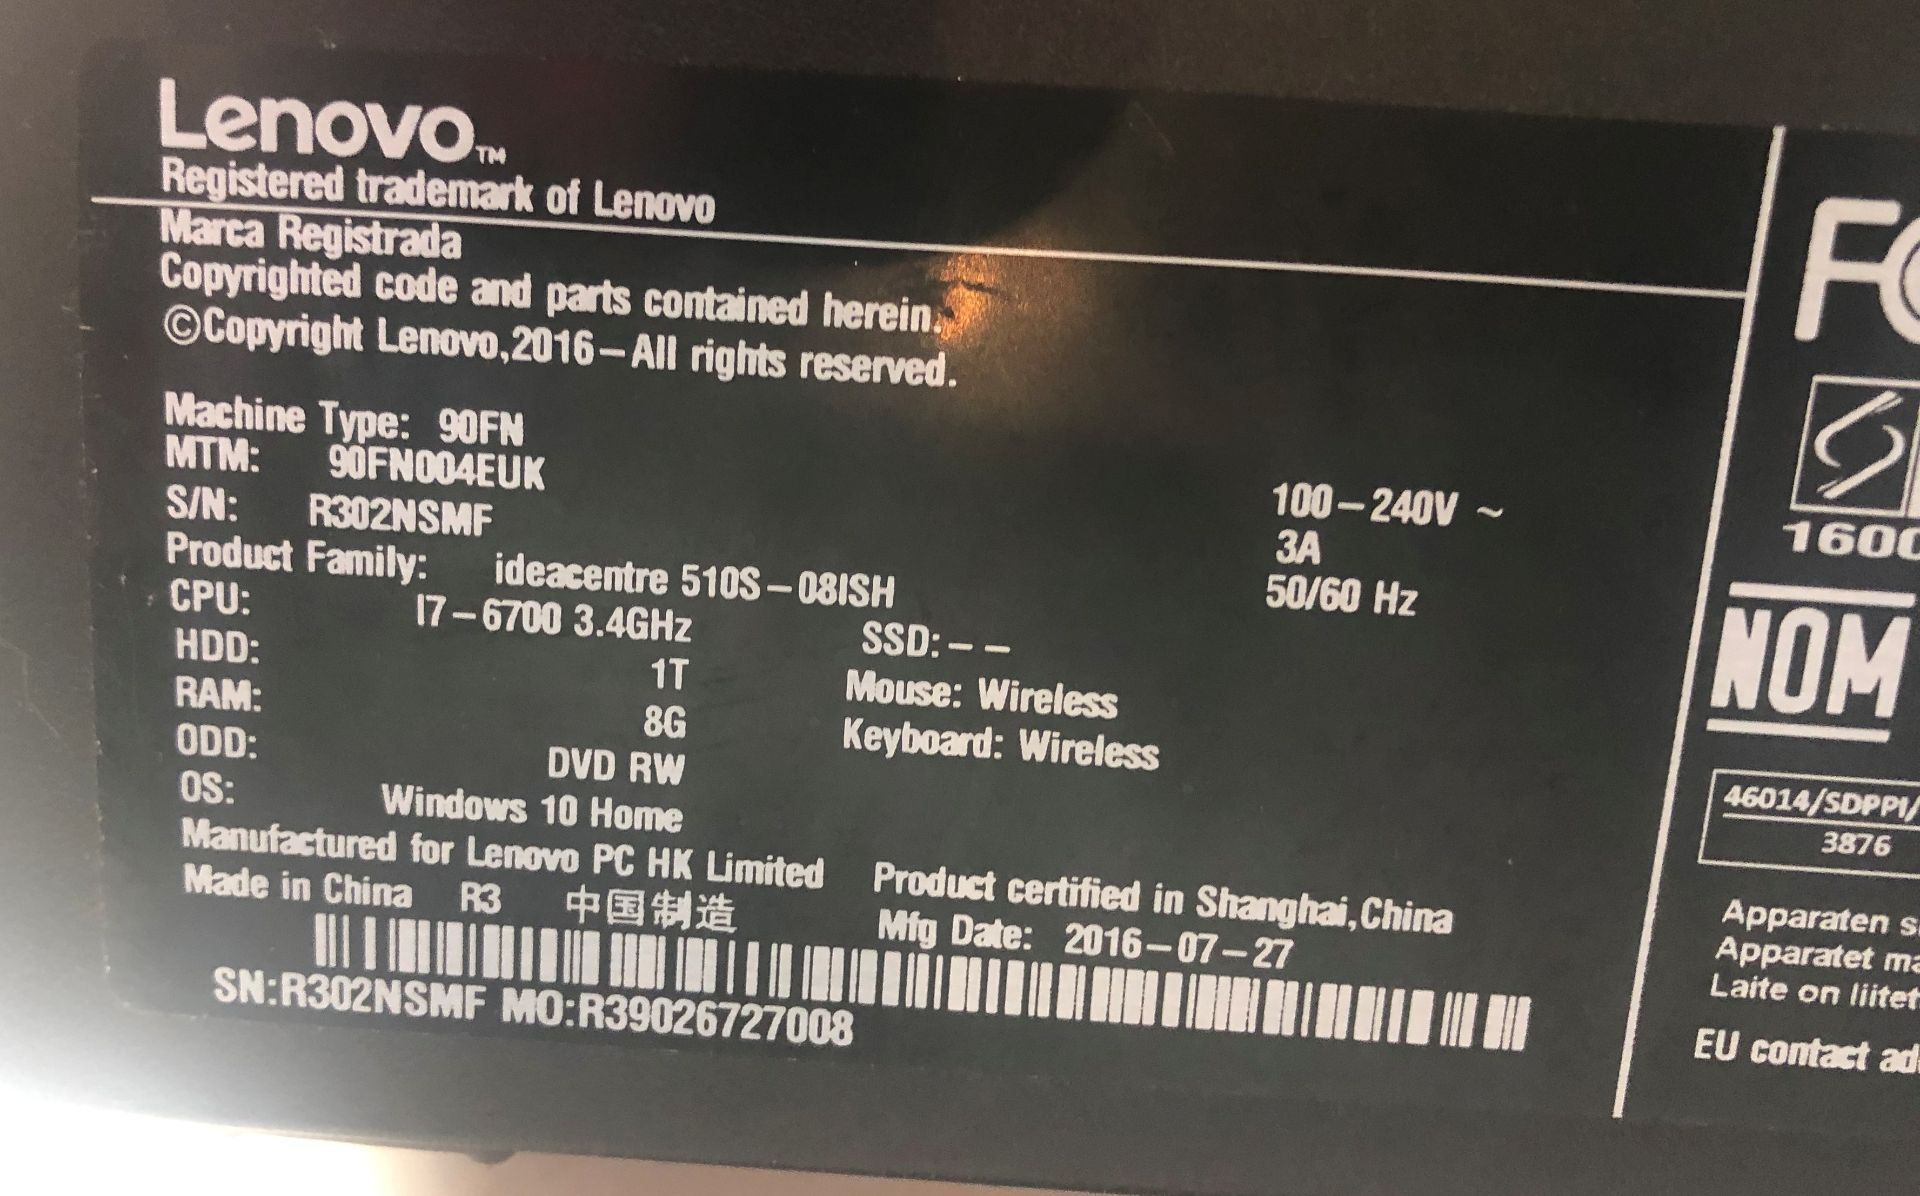 Lenovo 90FN Desktop Computer | Intel Core i7-6700 3.40GHz - Image 4 of 4